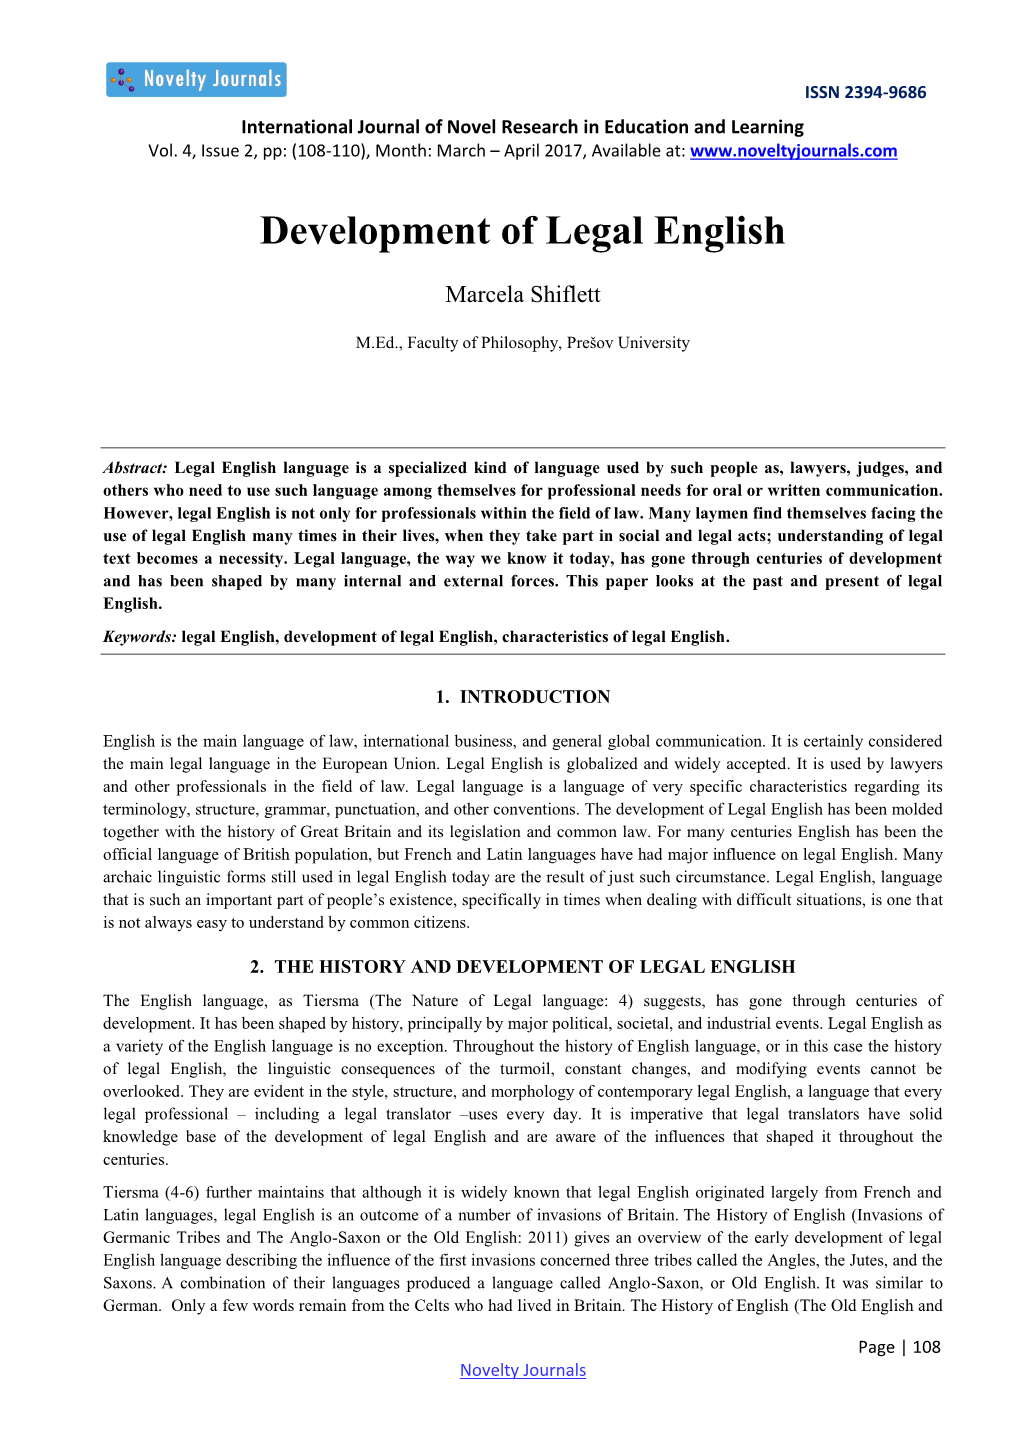 Development of Legal English